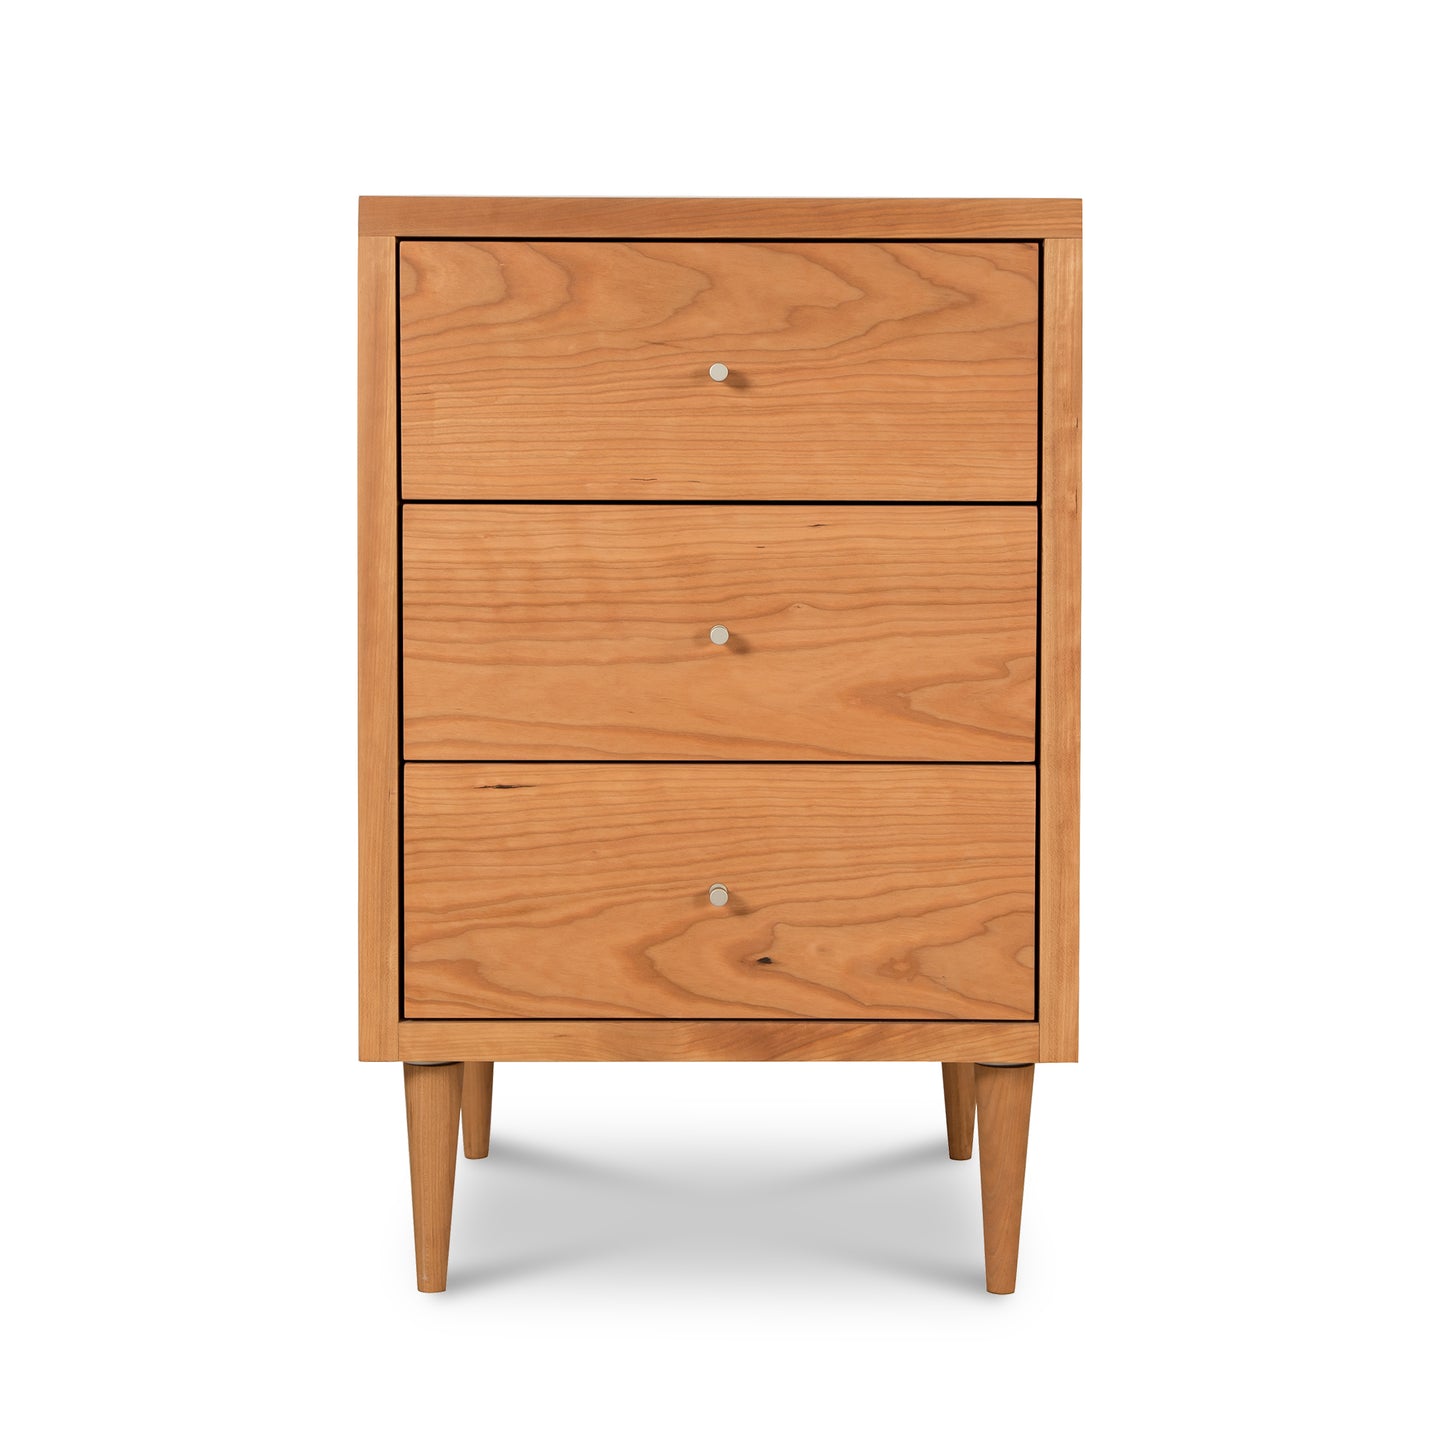 A Vermont Furniture Designs Larssen 3-Drawer Nightstand, featuring a mid-century modern design with three drawers.